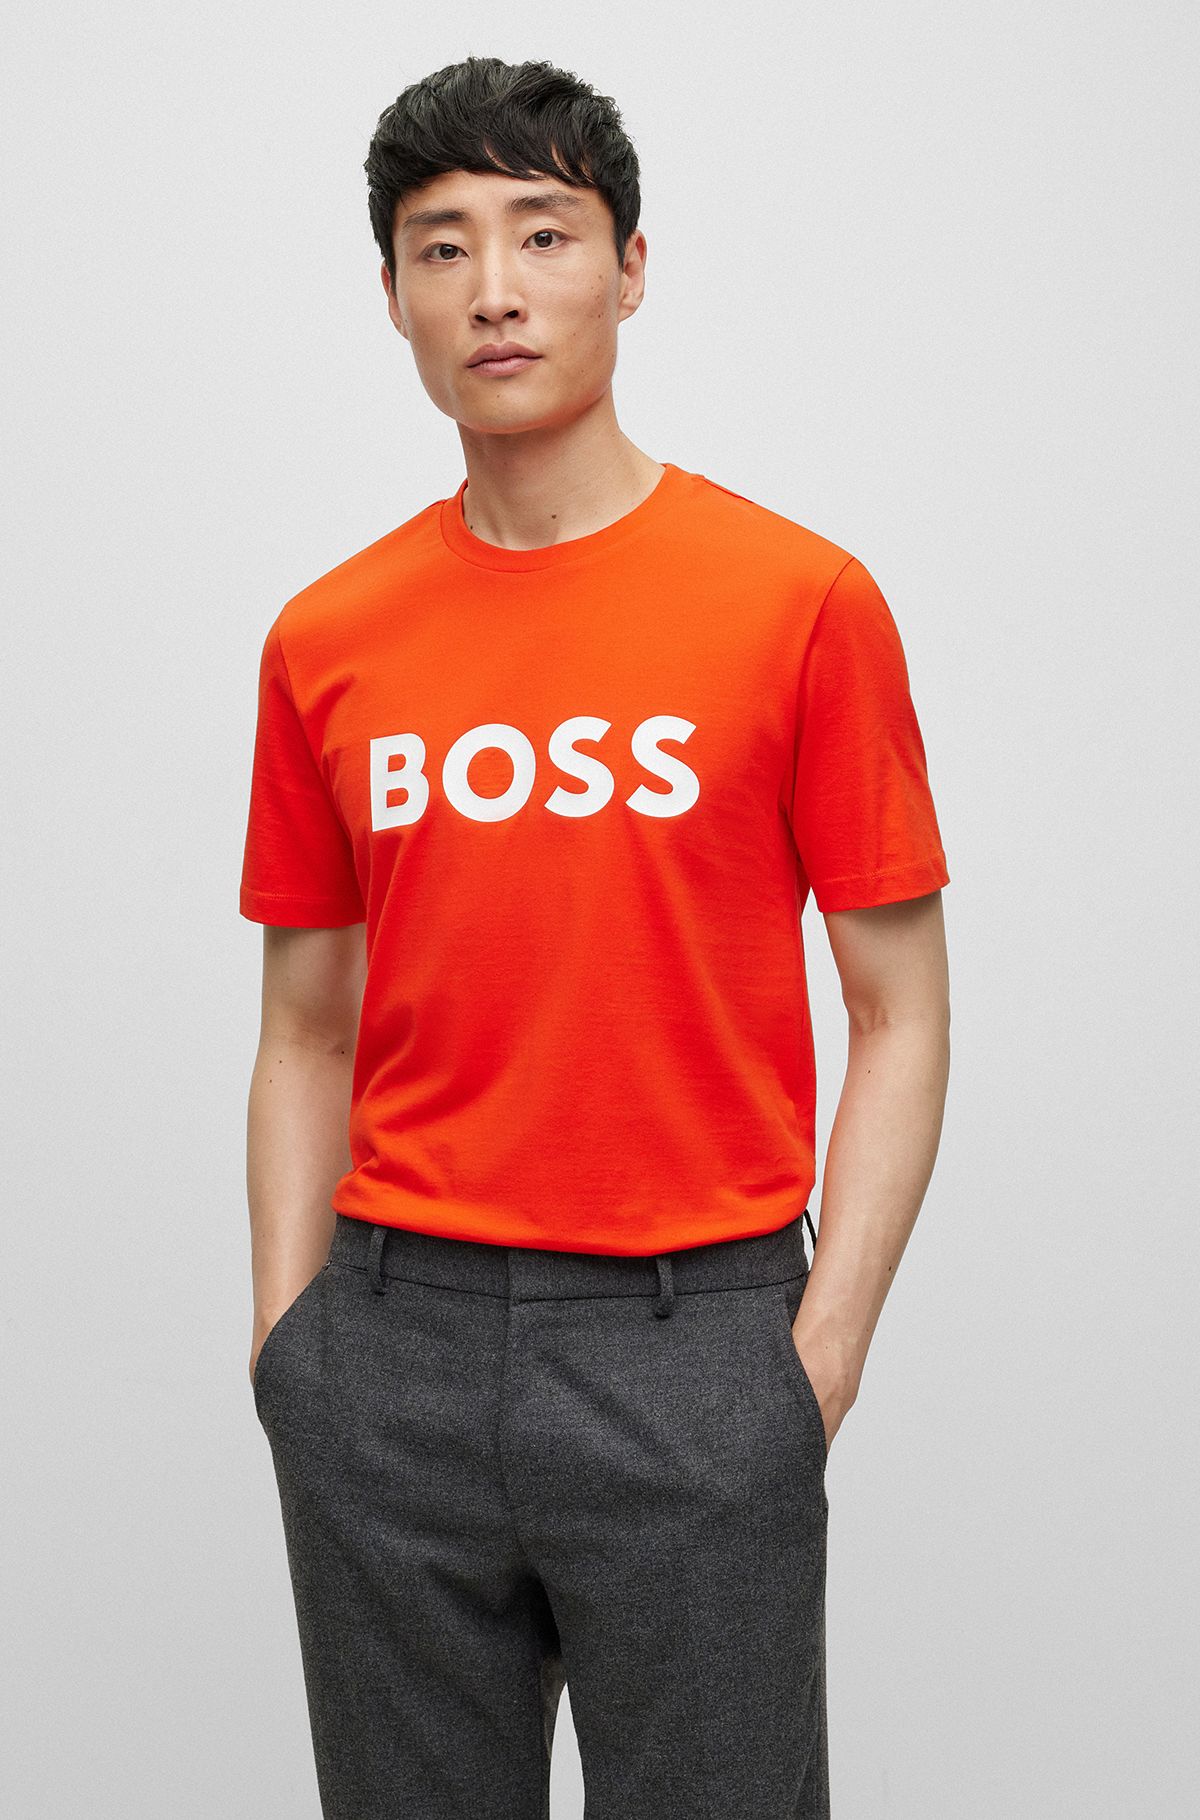 Cotton-jersey T-shirt with logo print, Orange